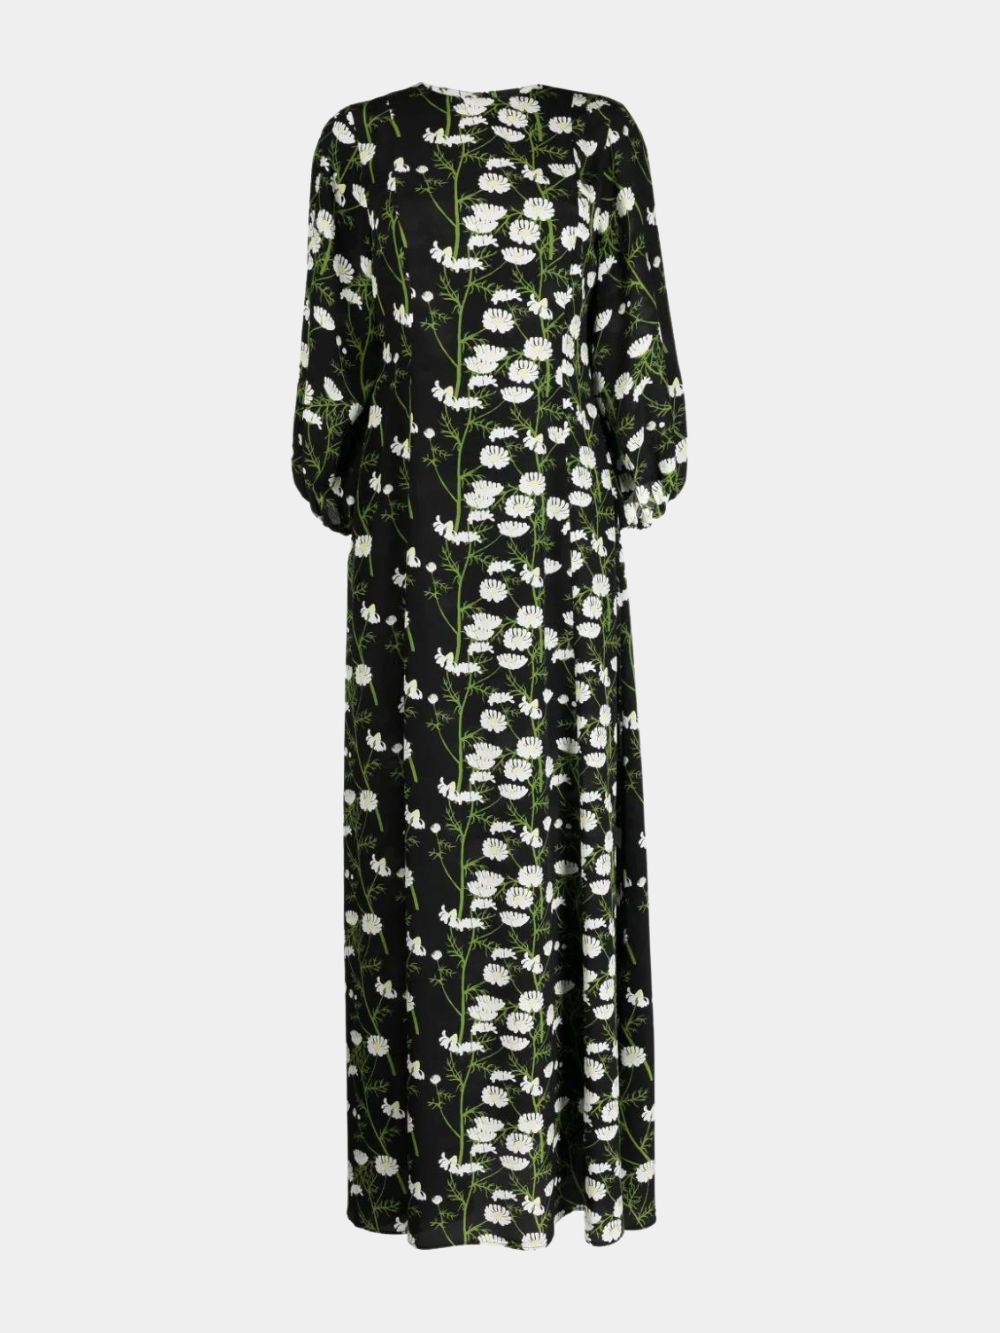 Bernadette Roxy Dress Lily Of The Valley